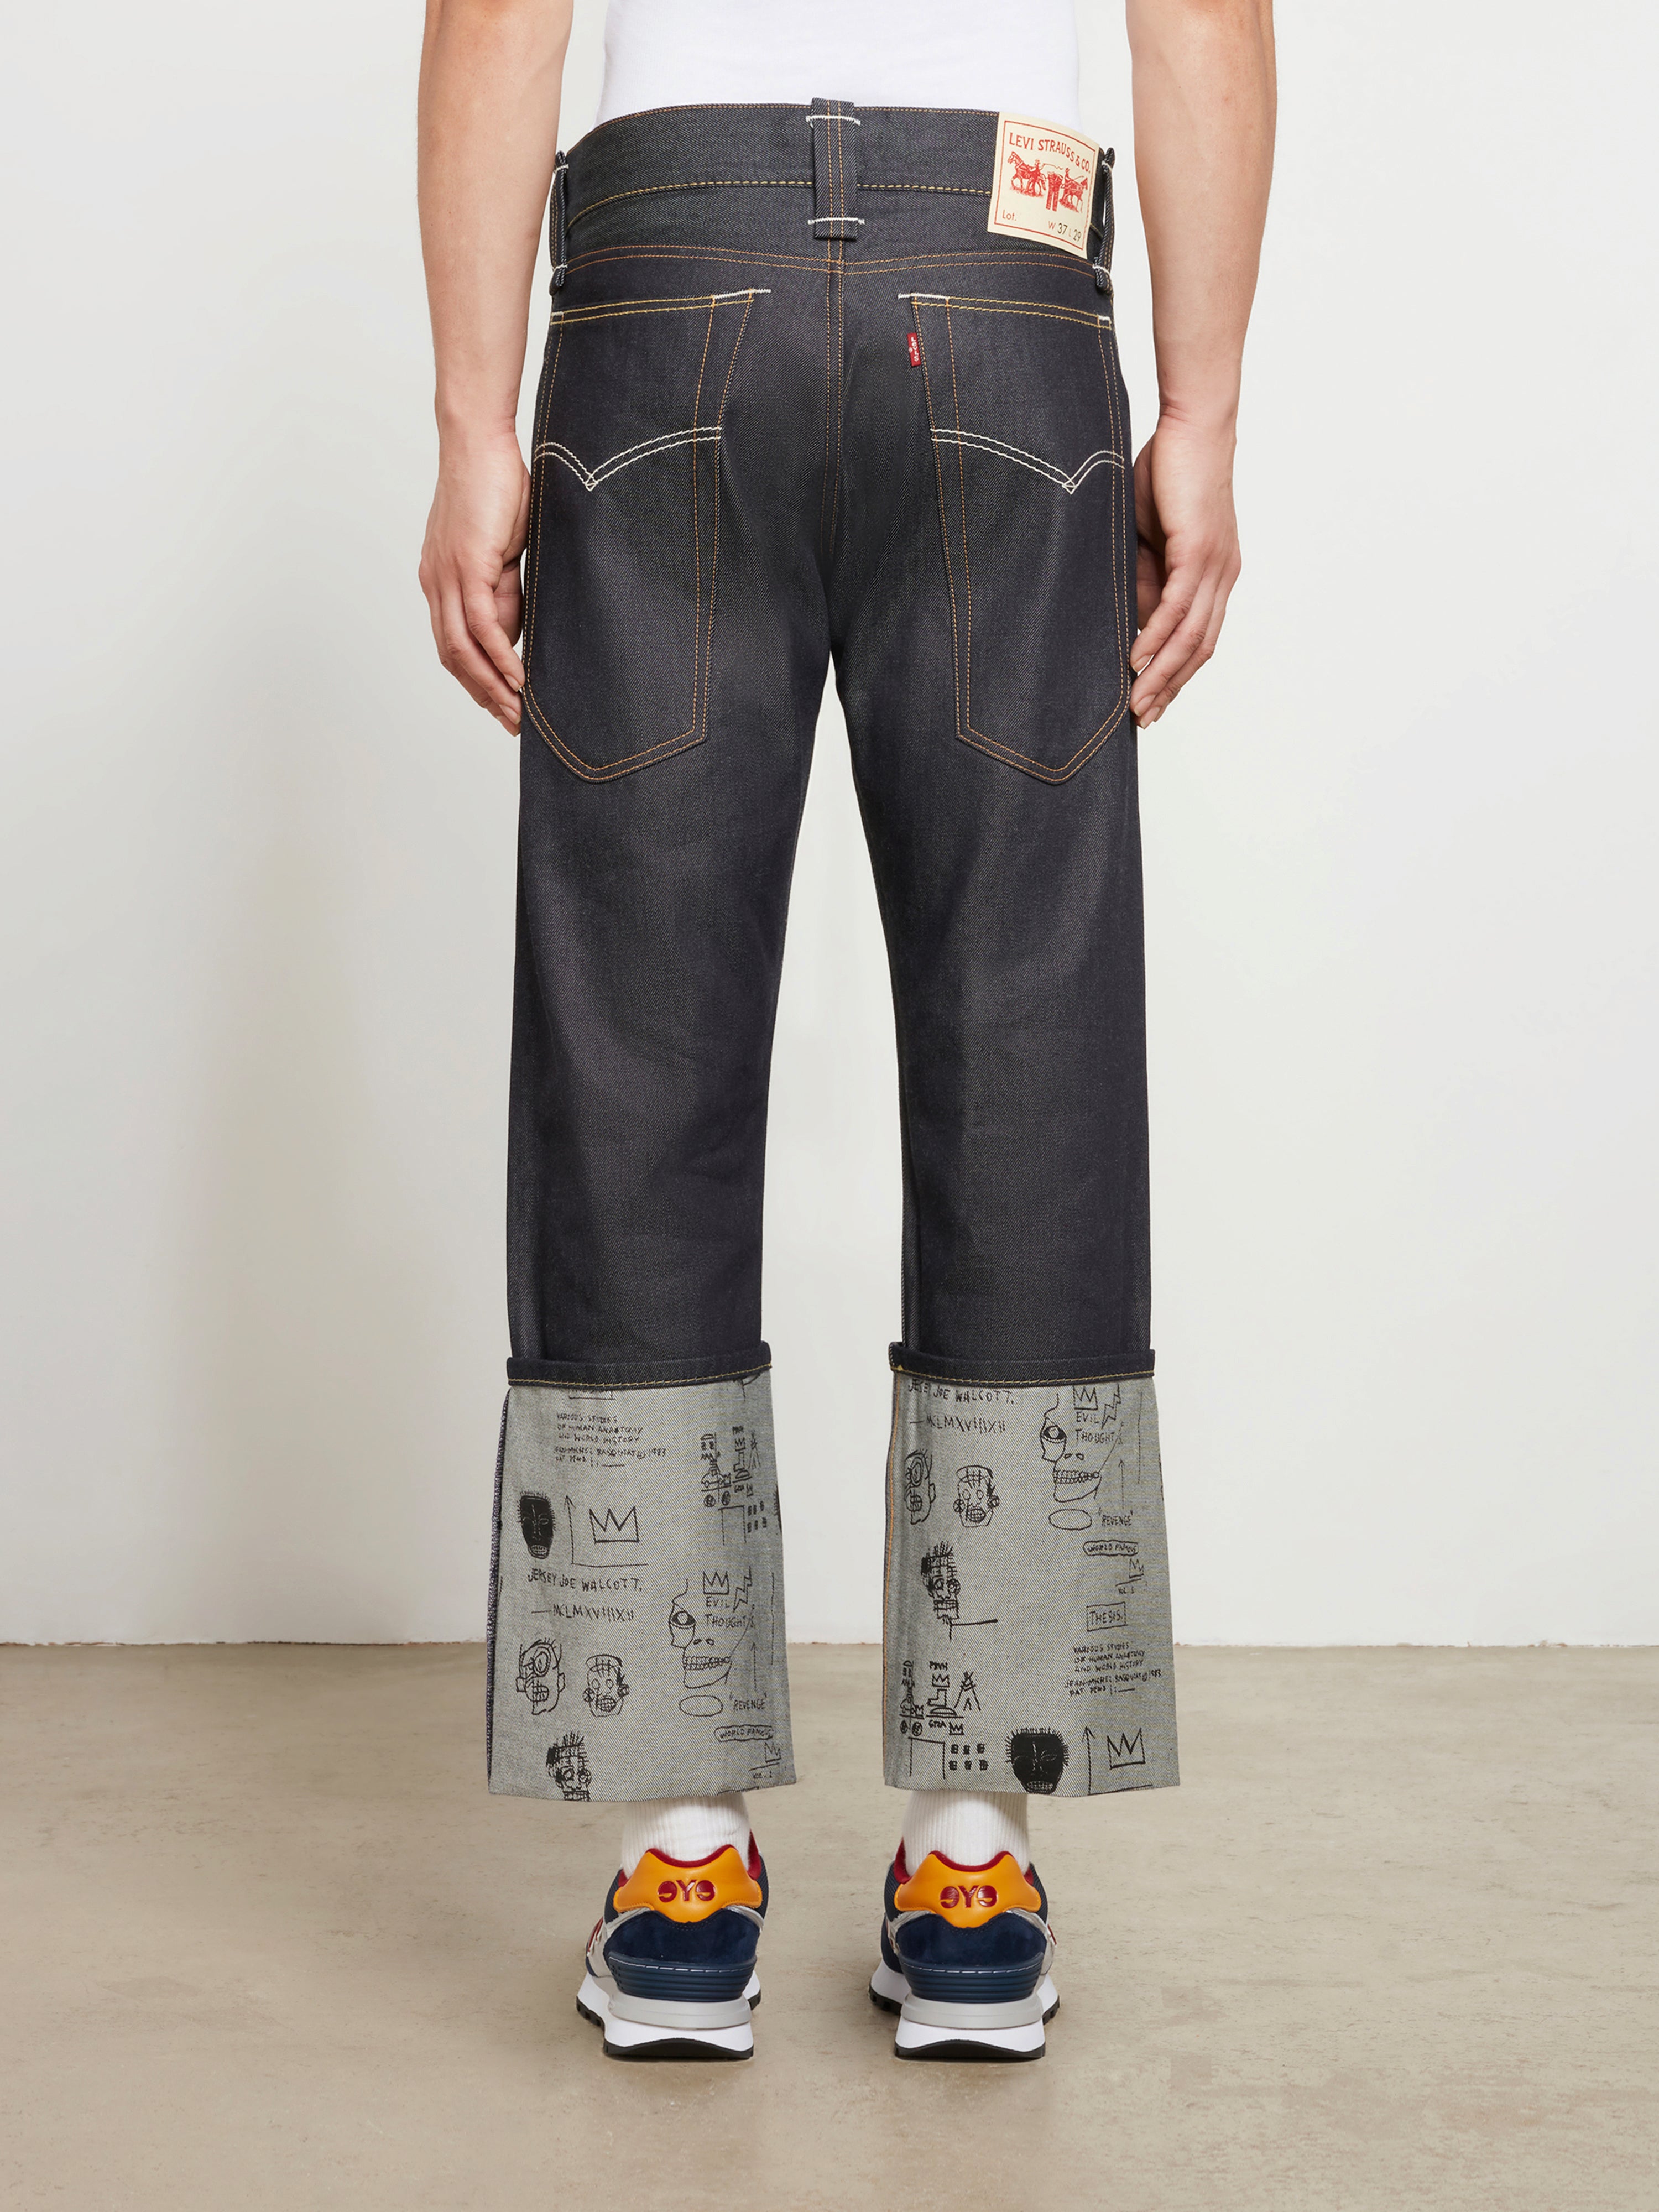 Junya Watanabe MAN - Levi’s x Jean-Michel Basquiat Selvedge Denim Jeans -  (Indigo)